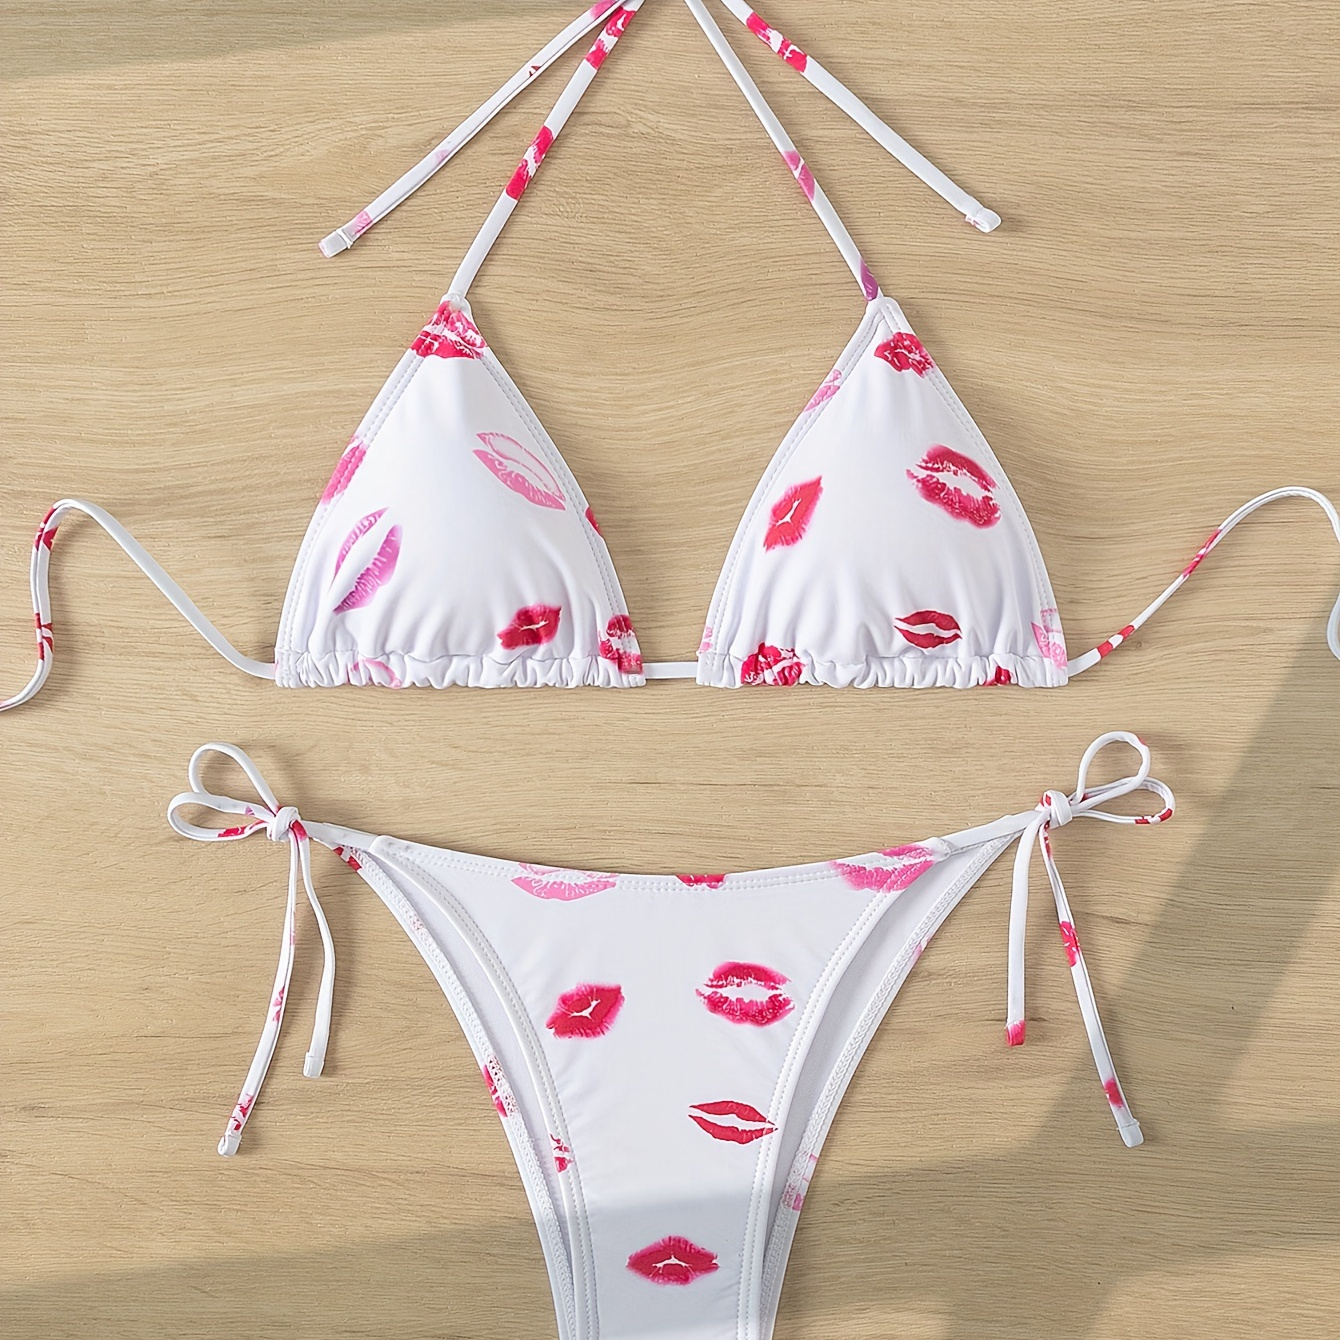 

Women's Bikini Swimsuit Set, Lip Prints, Tie-up Neck And Side Bottoms, Adjustable Triangle Top, Summer Beachwear